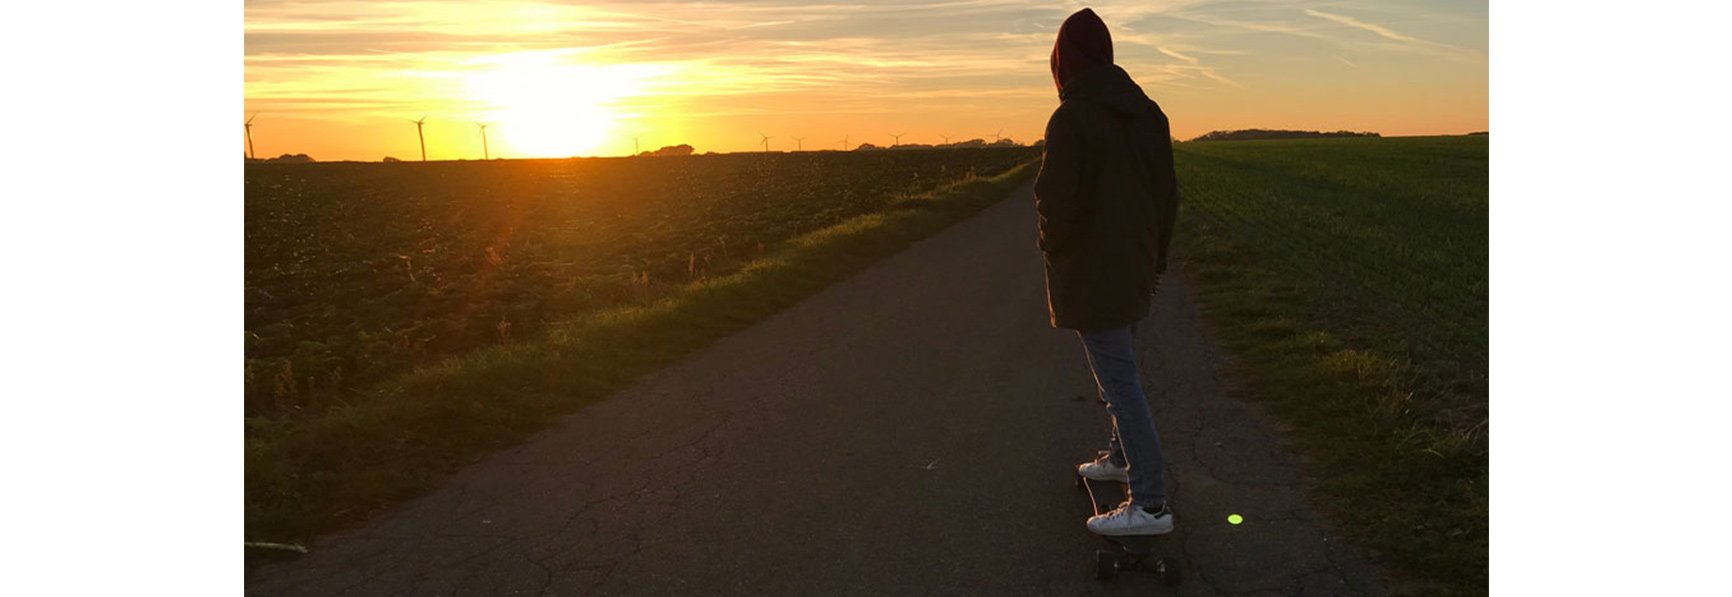 meepo board rider sunset